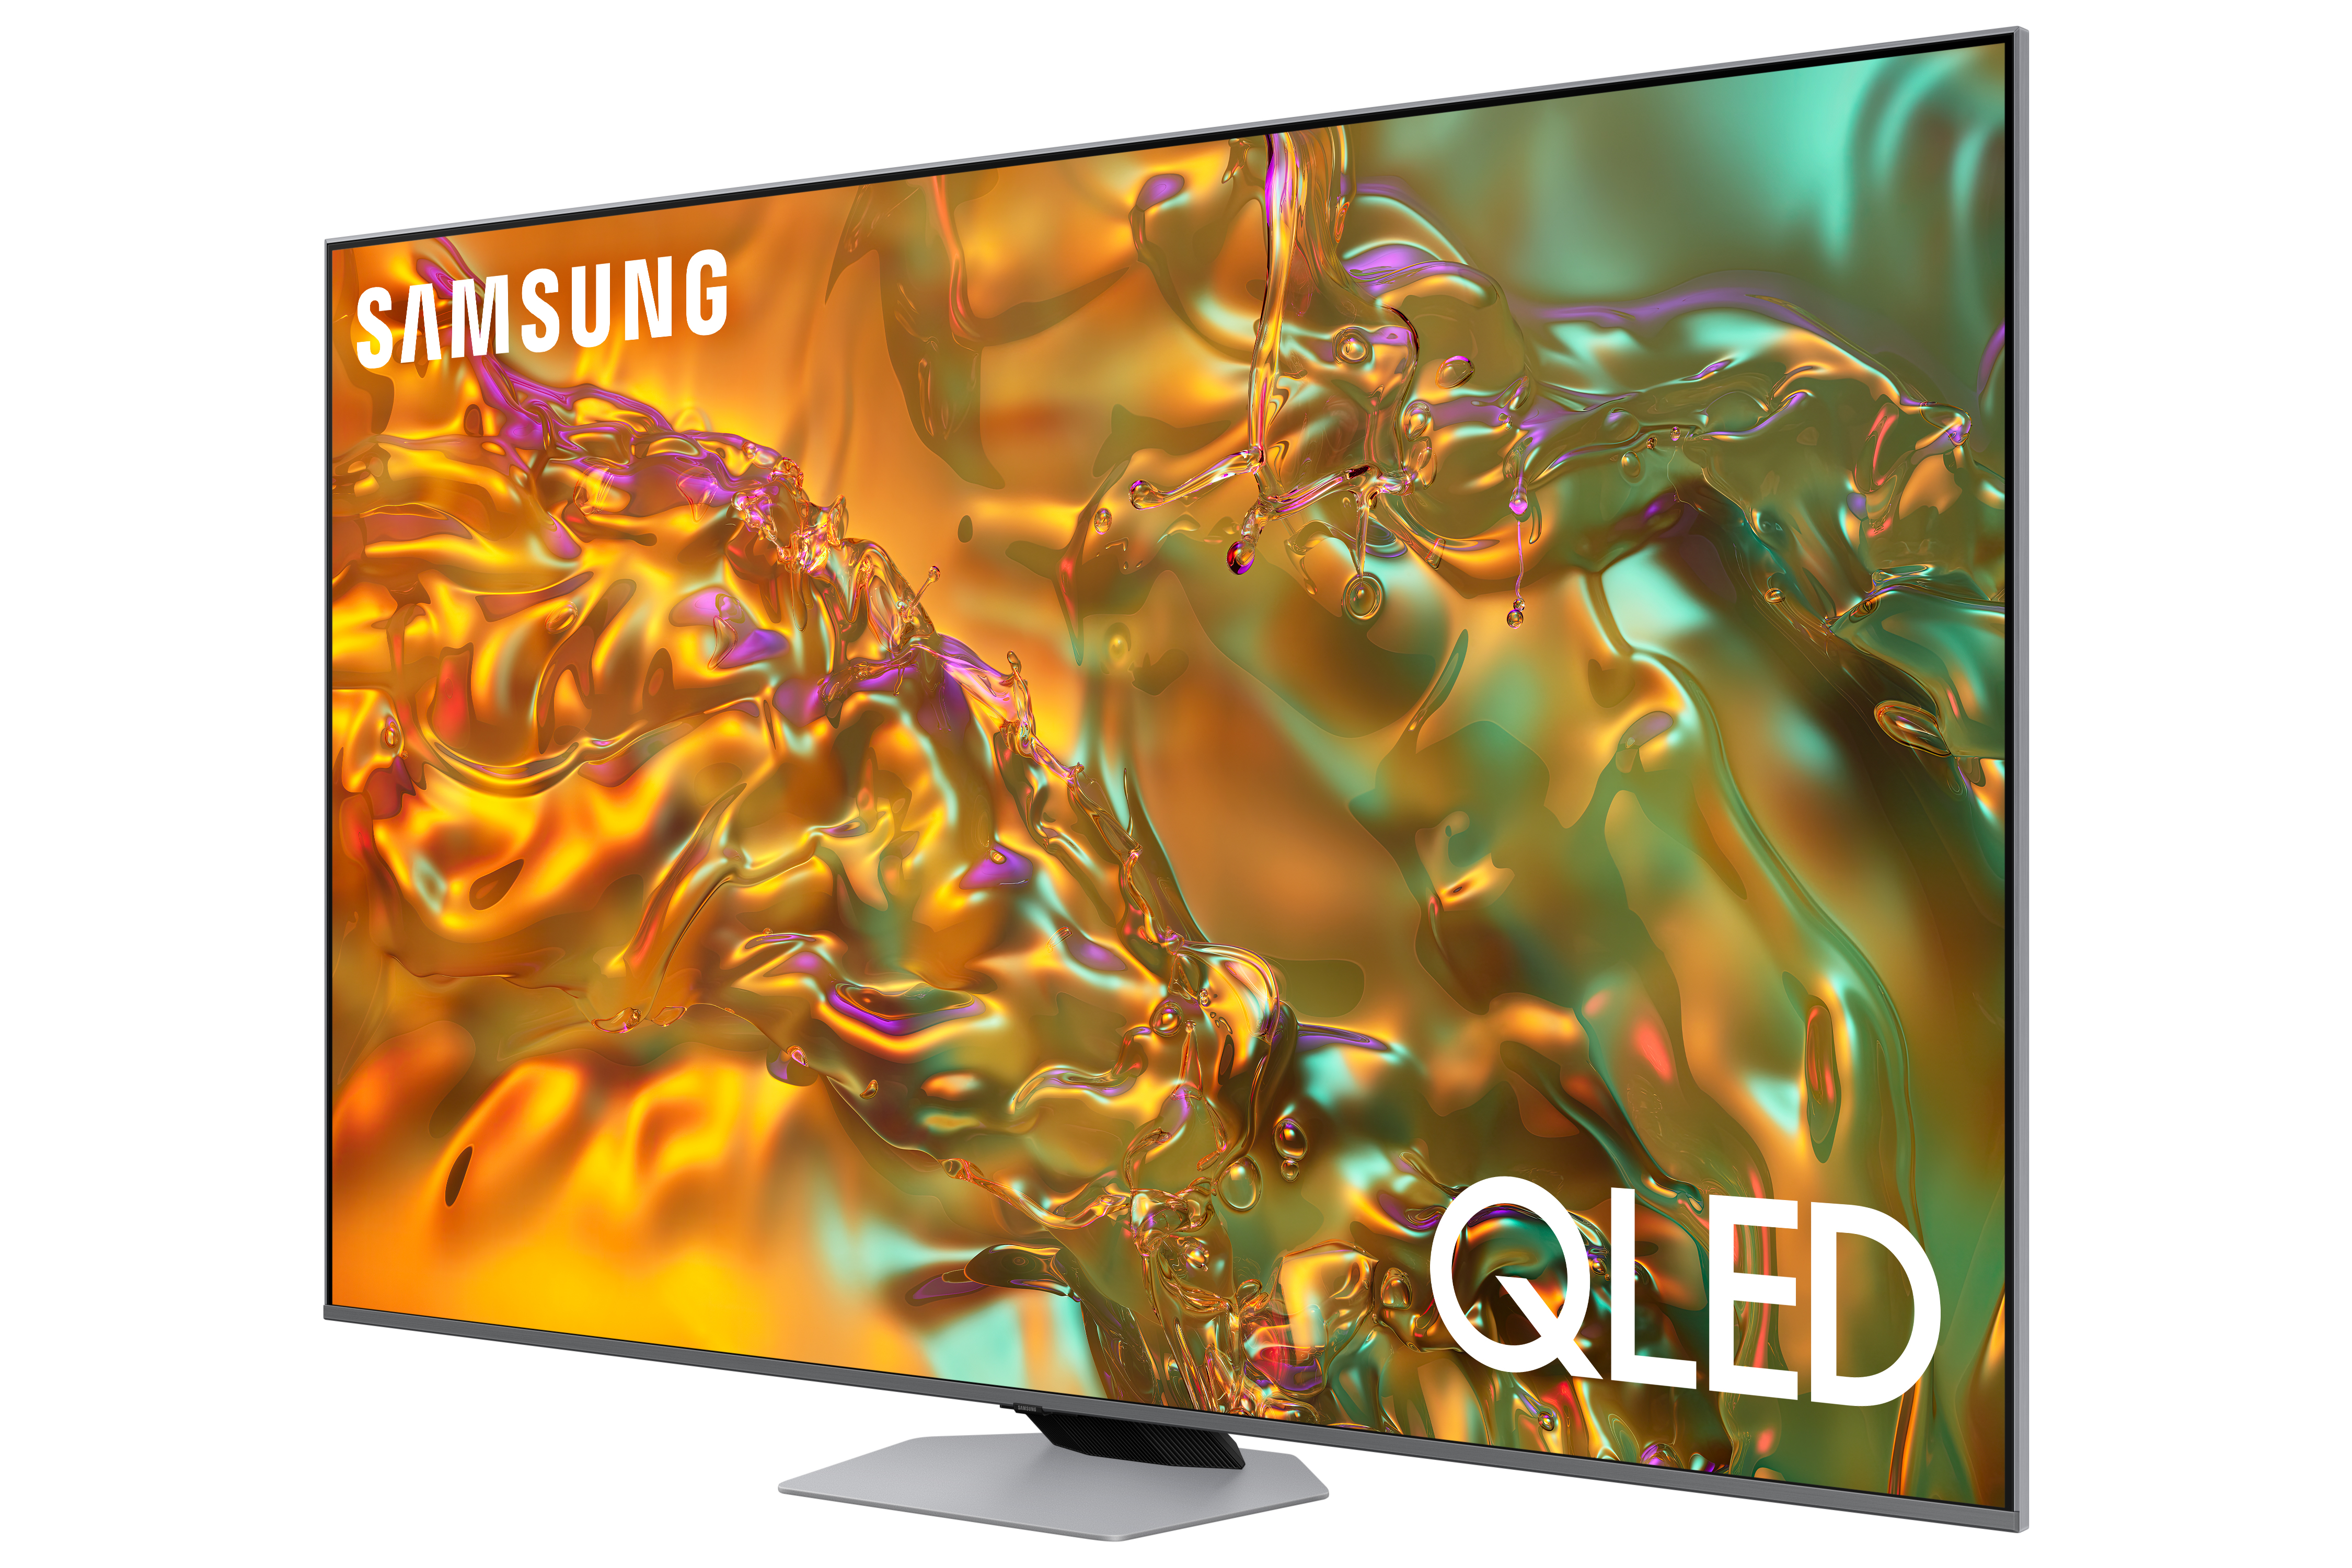 QLED Tivi 4K Samsung 65 inch 65Q80D Smart TV